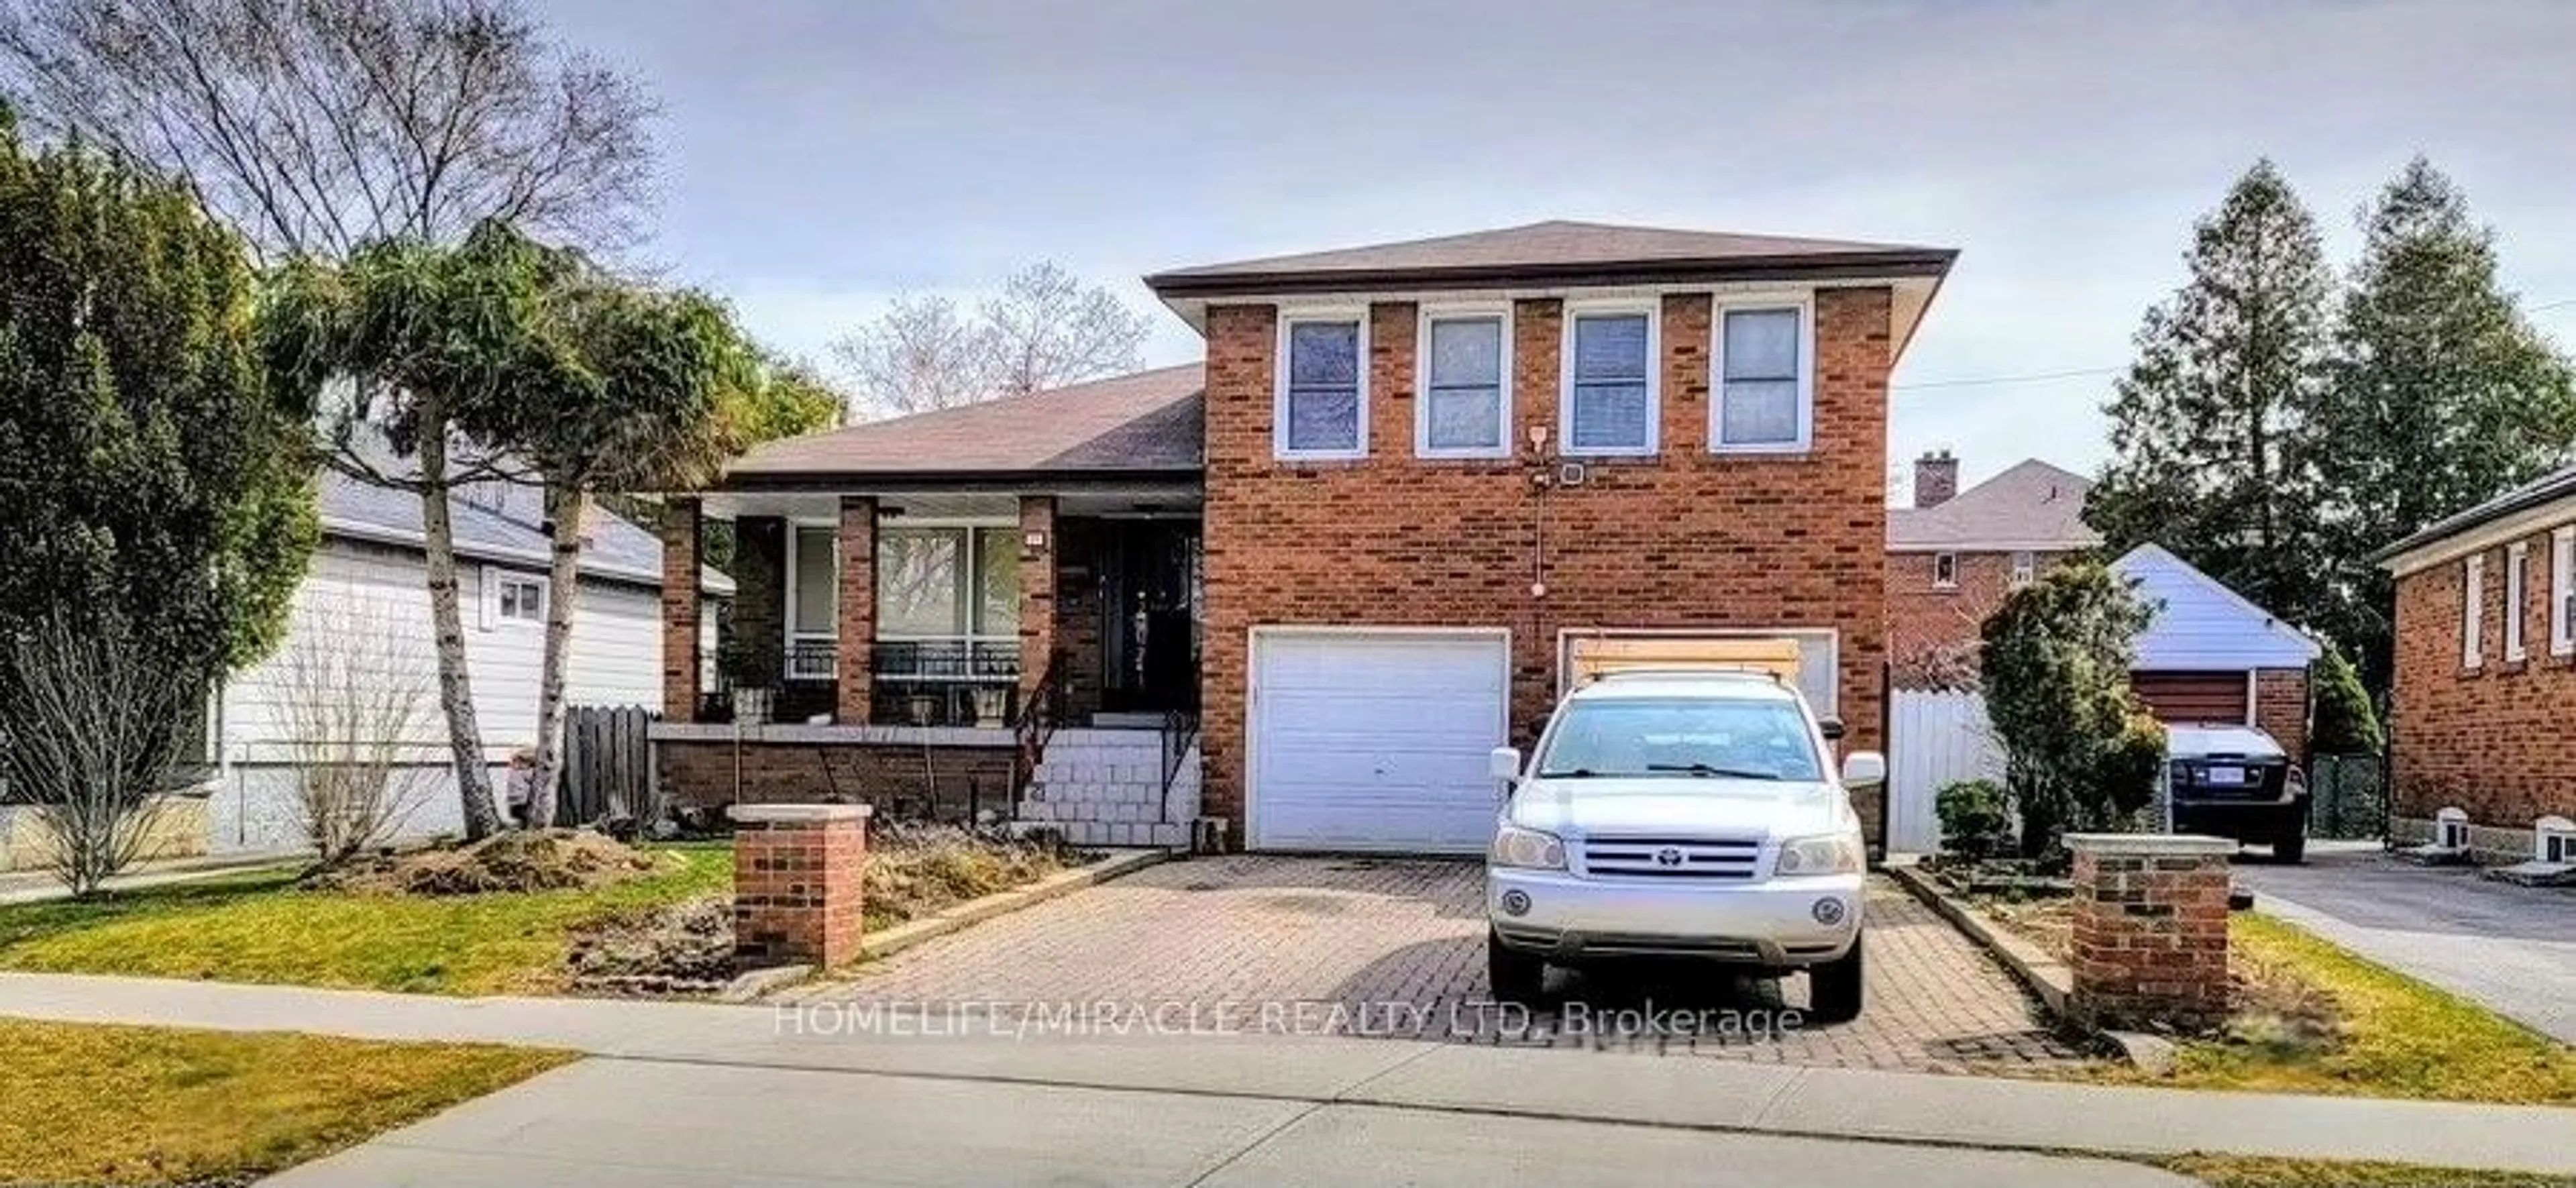 Home with brick exterior material for 21 Pelmo Cres, Toronto Ontario M9N 2X4